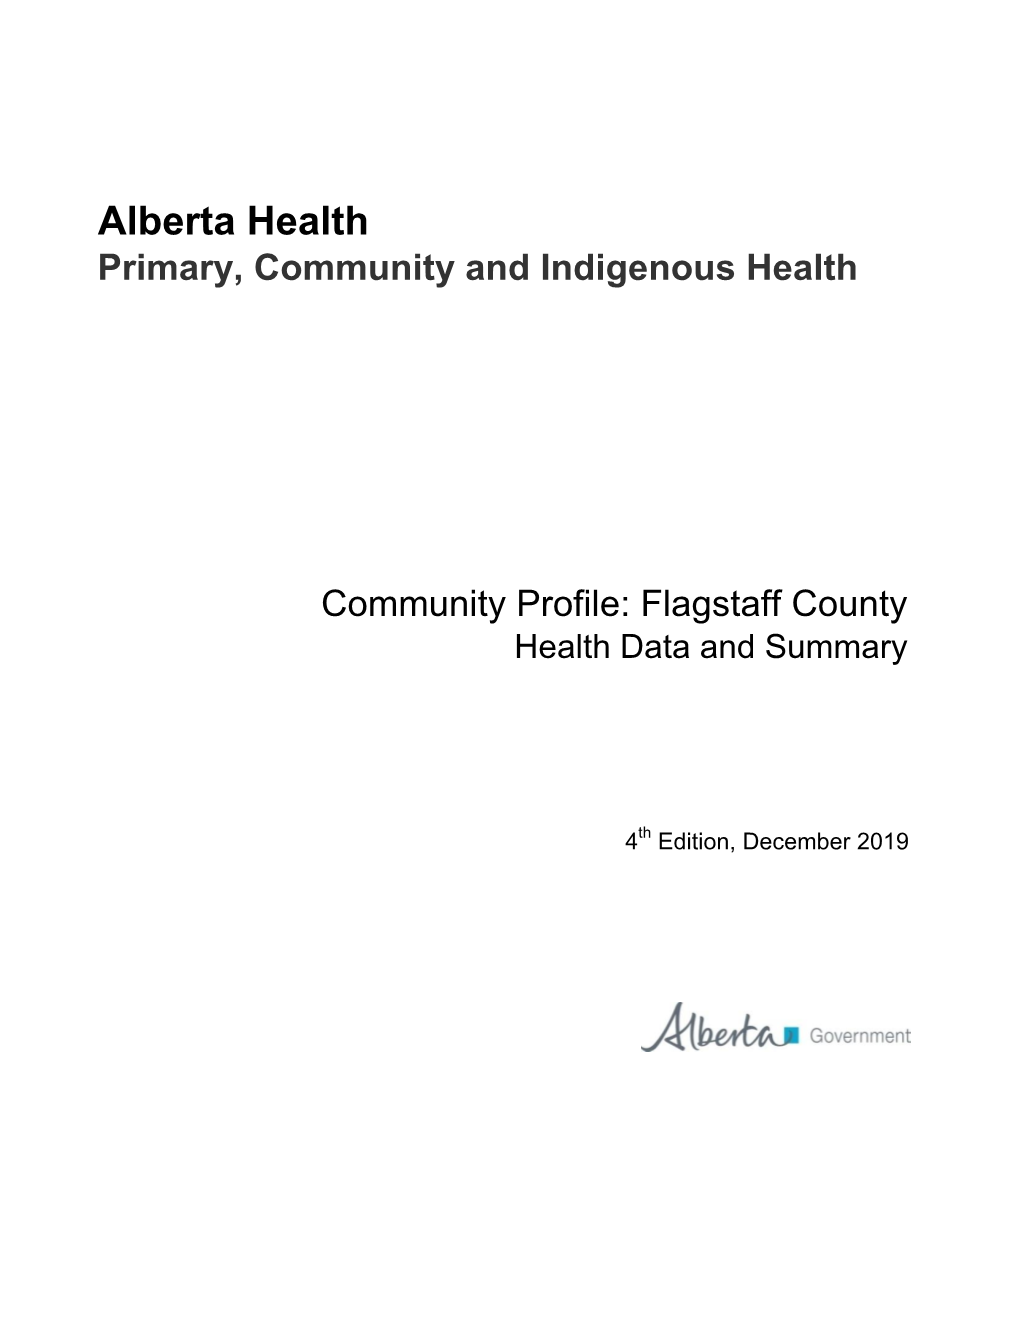 Community Profile: Flagstaff County Health Data and Summary. 4Th